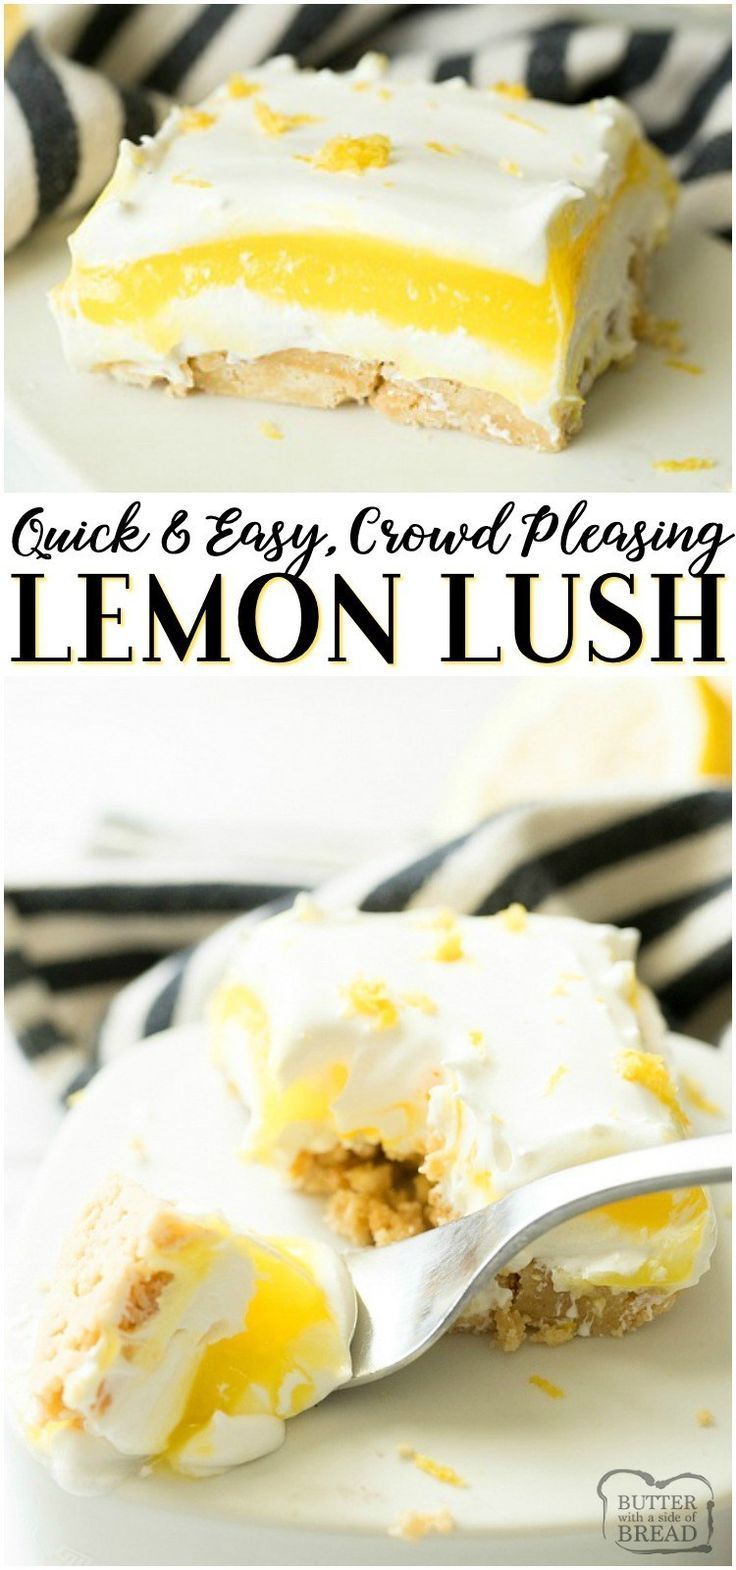 Lemon Lush is an easy no bake lemon dessert that comes together fast and serves ... - Dessert -   17 lemon desserts Fancy ideas